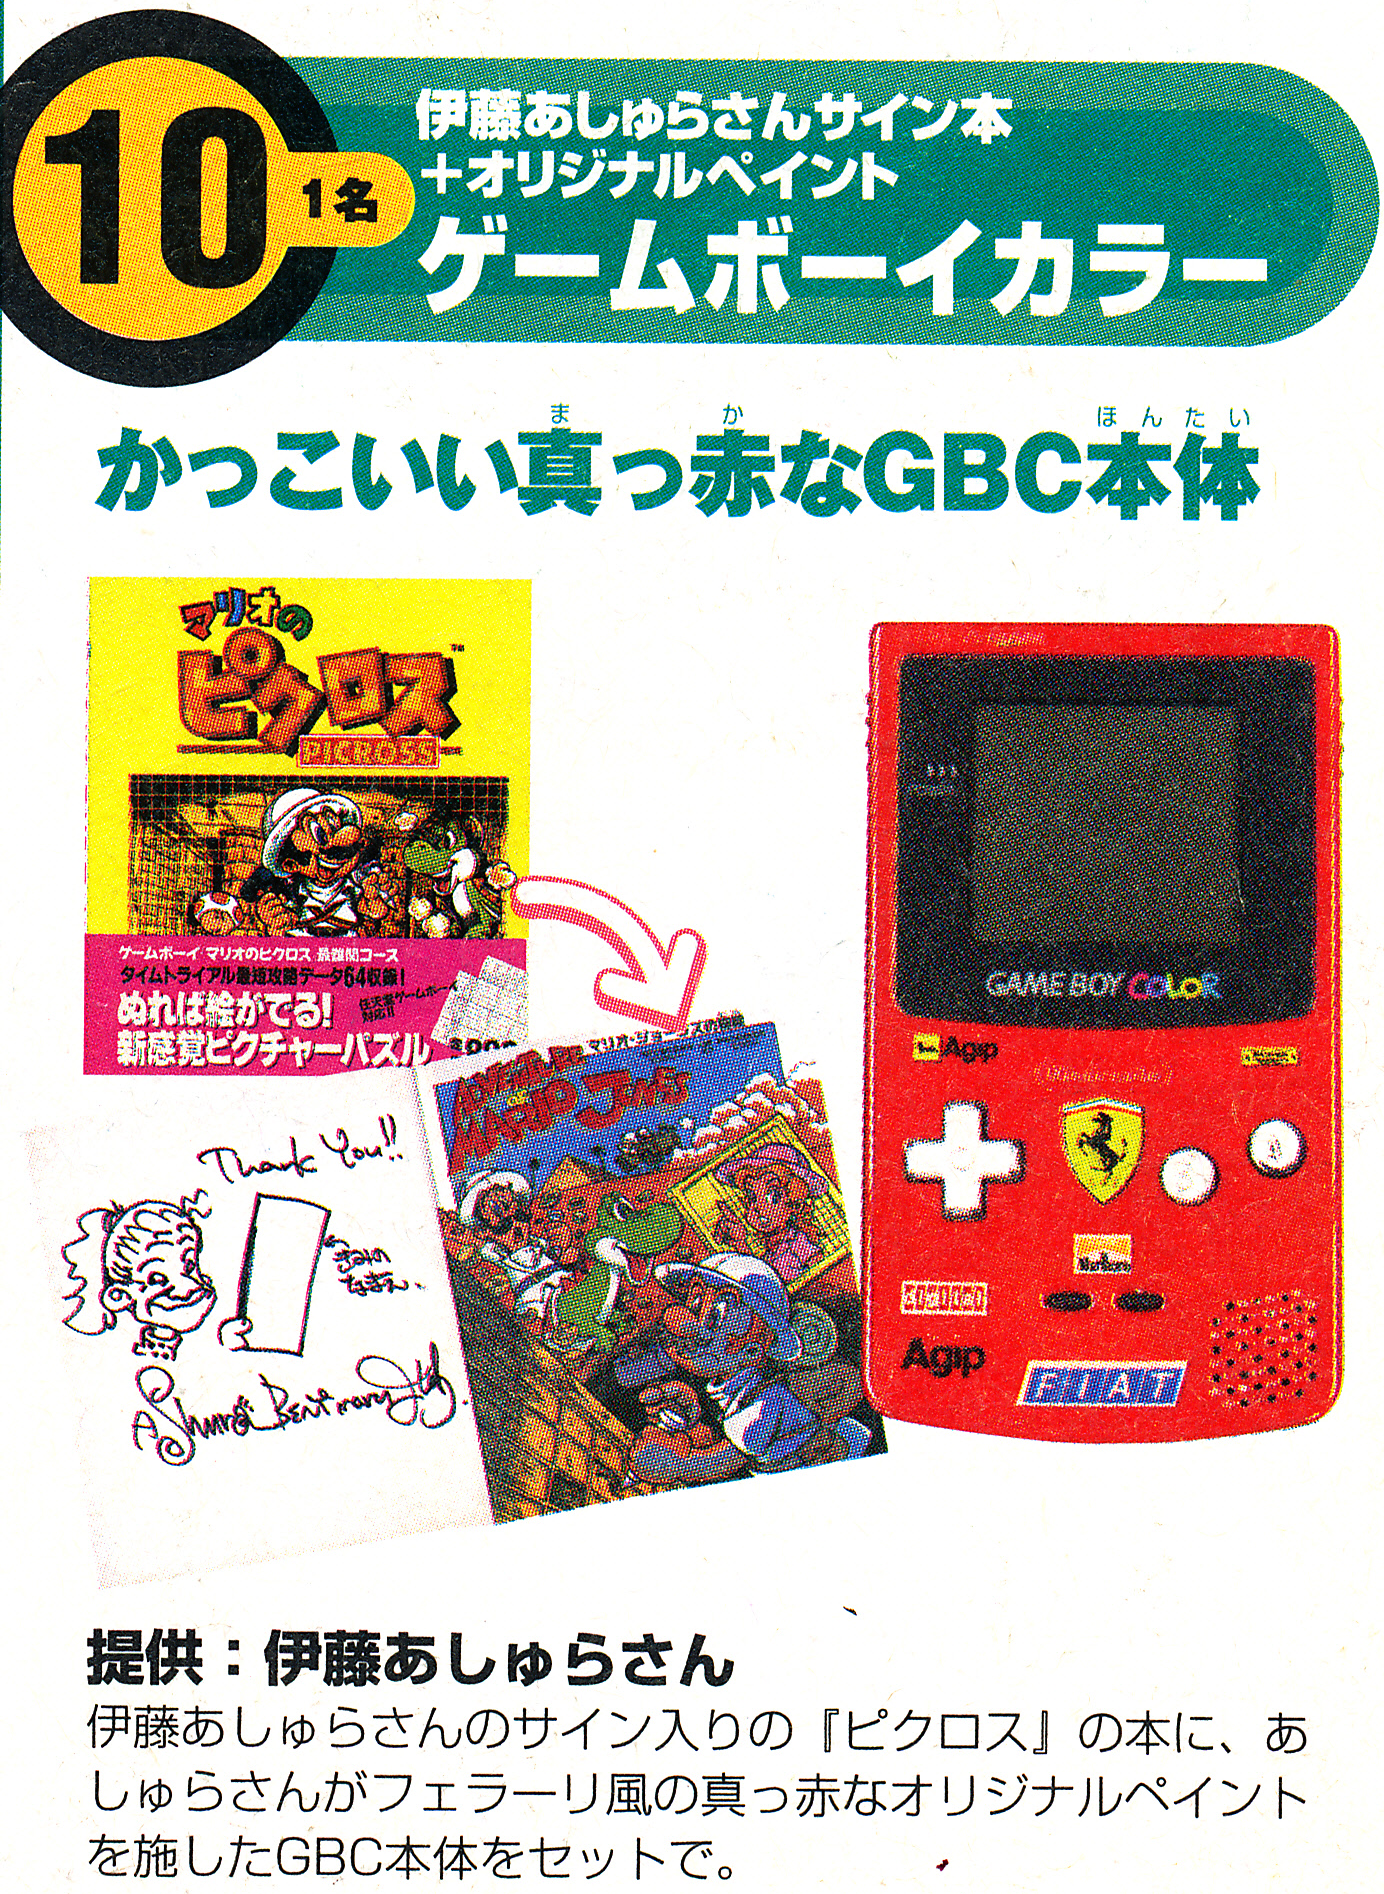  Nintendo Game Boy Color Ashuro Ito Ferrari Red Console [JP]